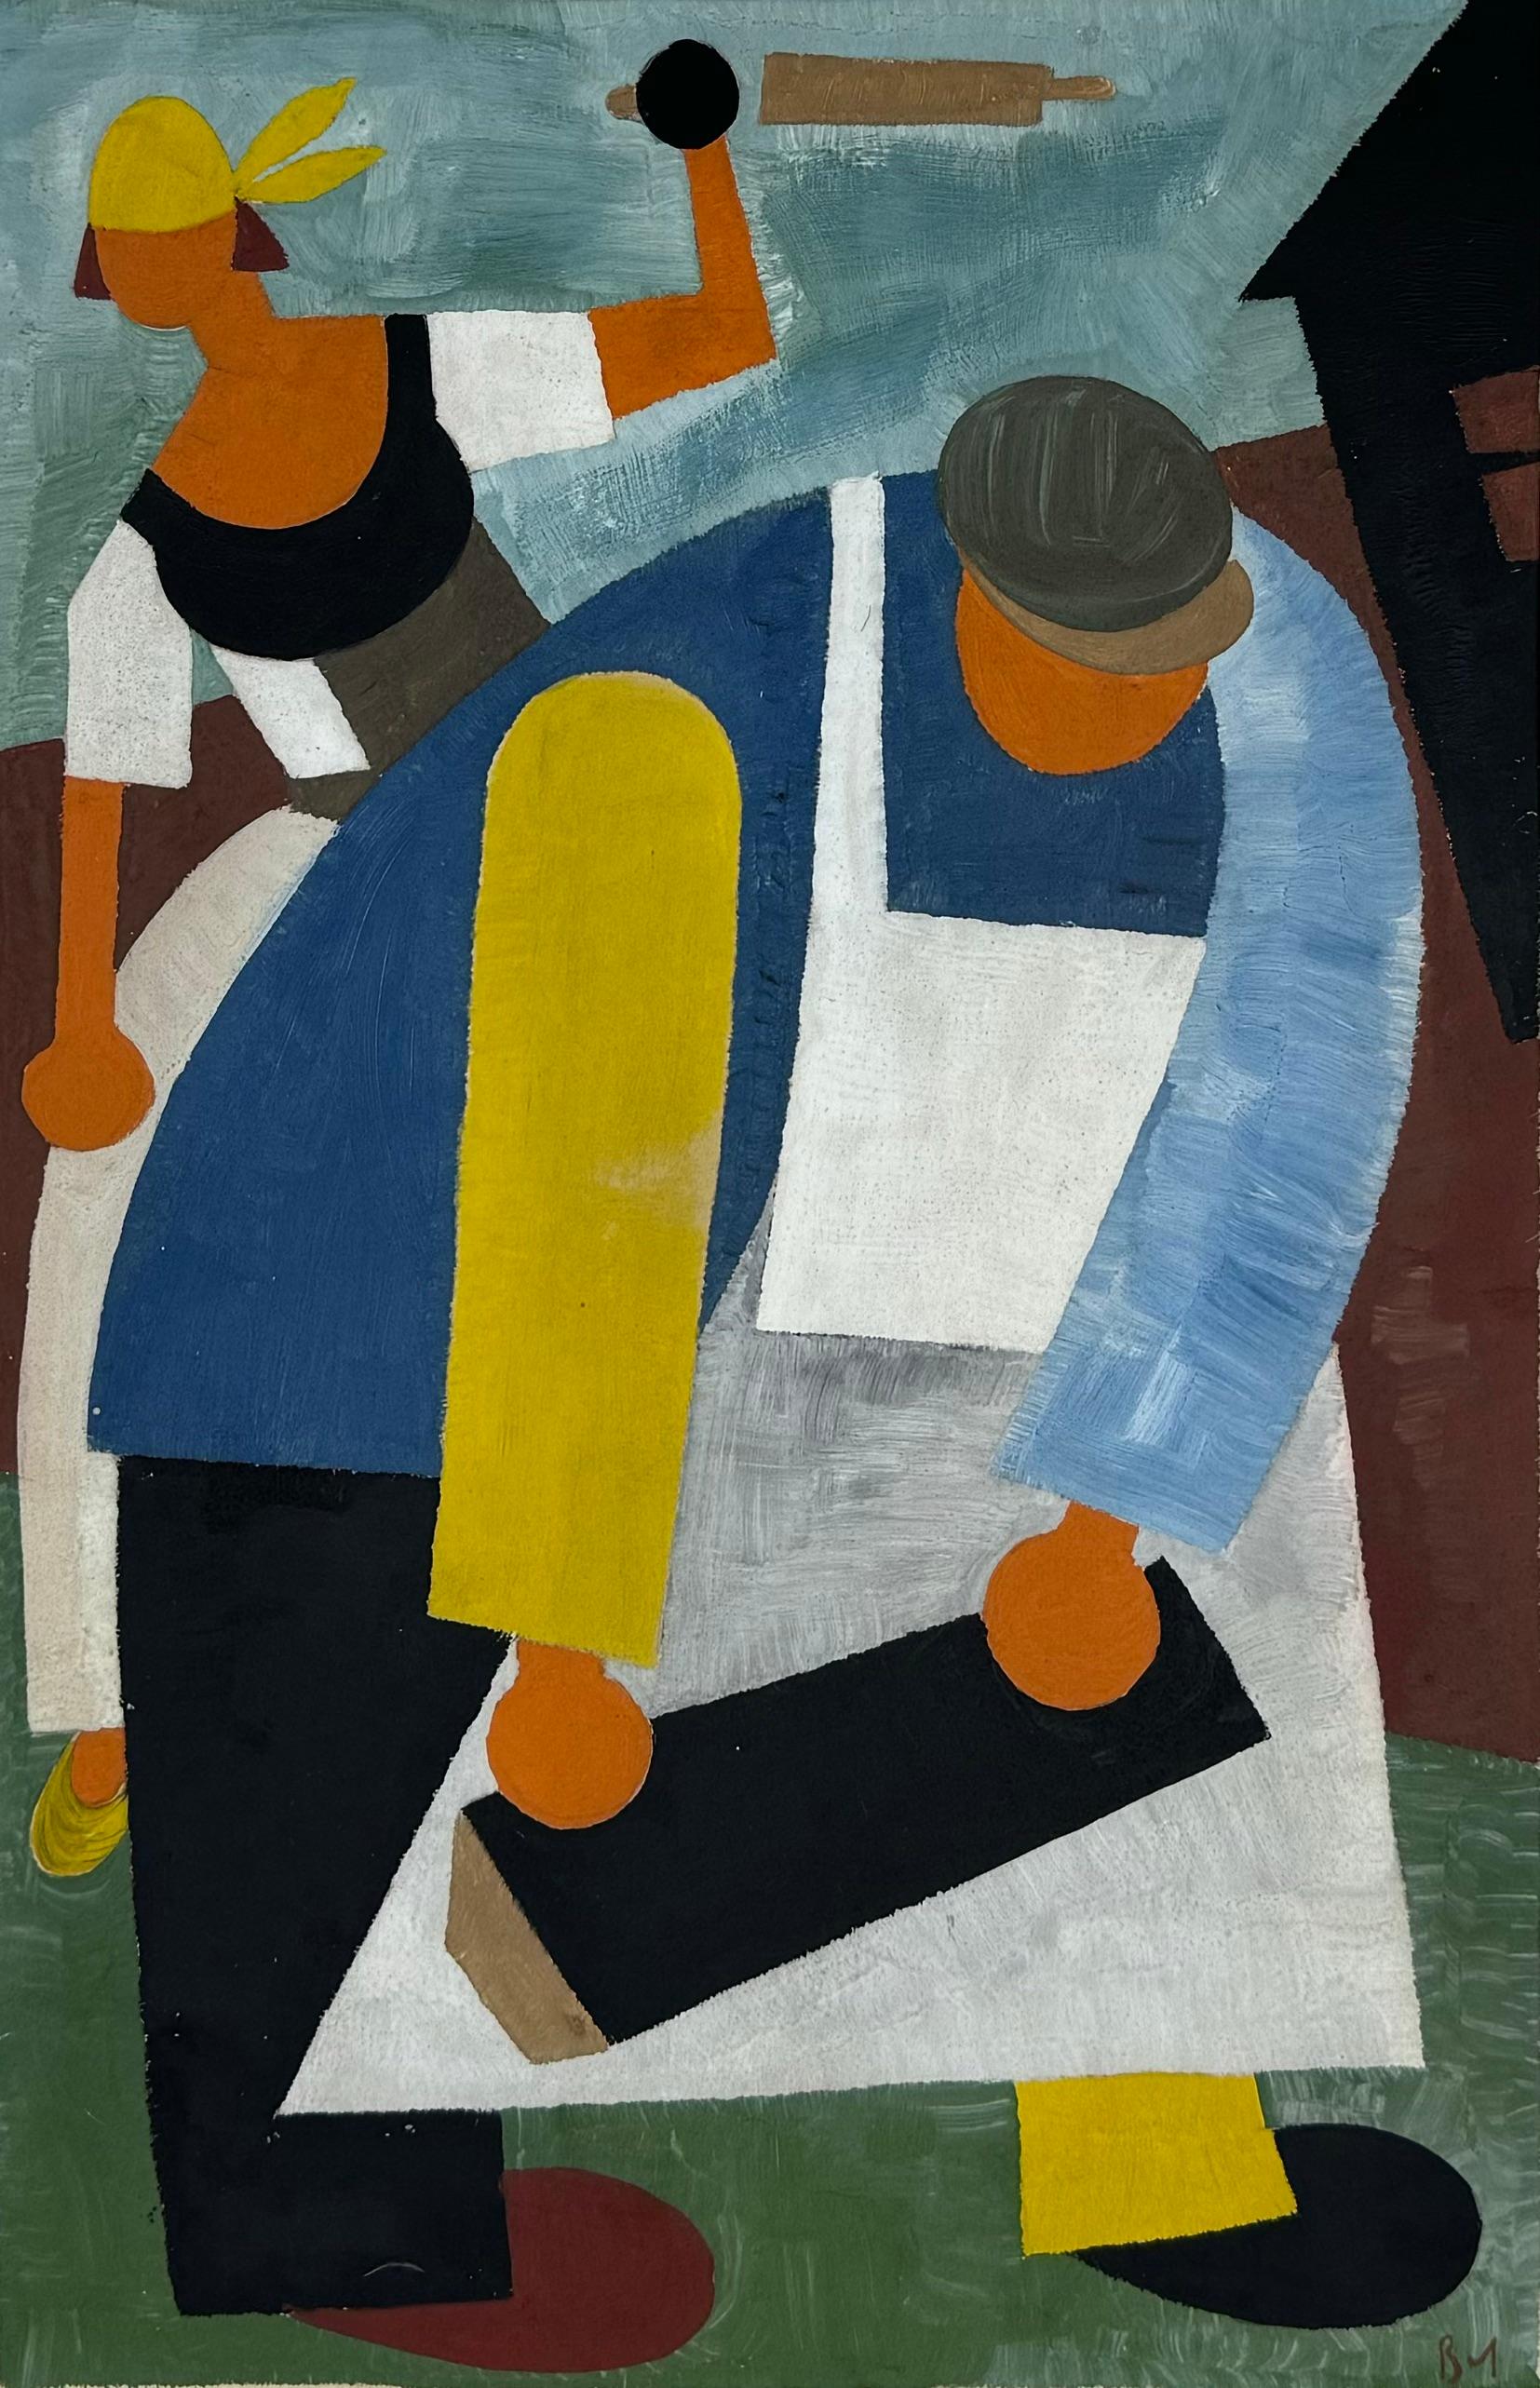 VLADIMIR VASIL’EVICH LEBEDEV Figurative Painting - "Workers" Russian Constructivist 1920s Modern Social Realism Cubism Figurative